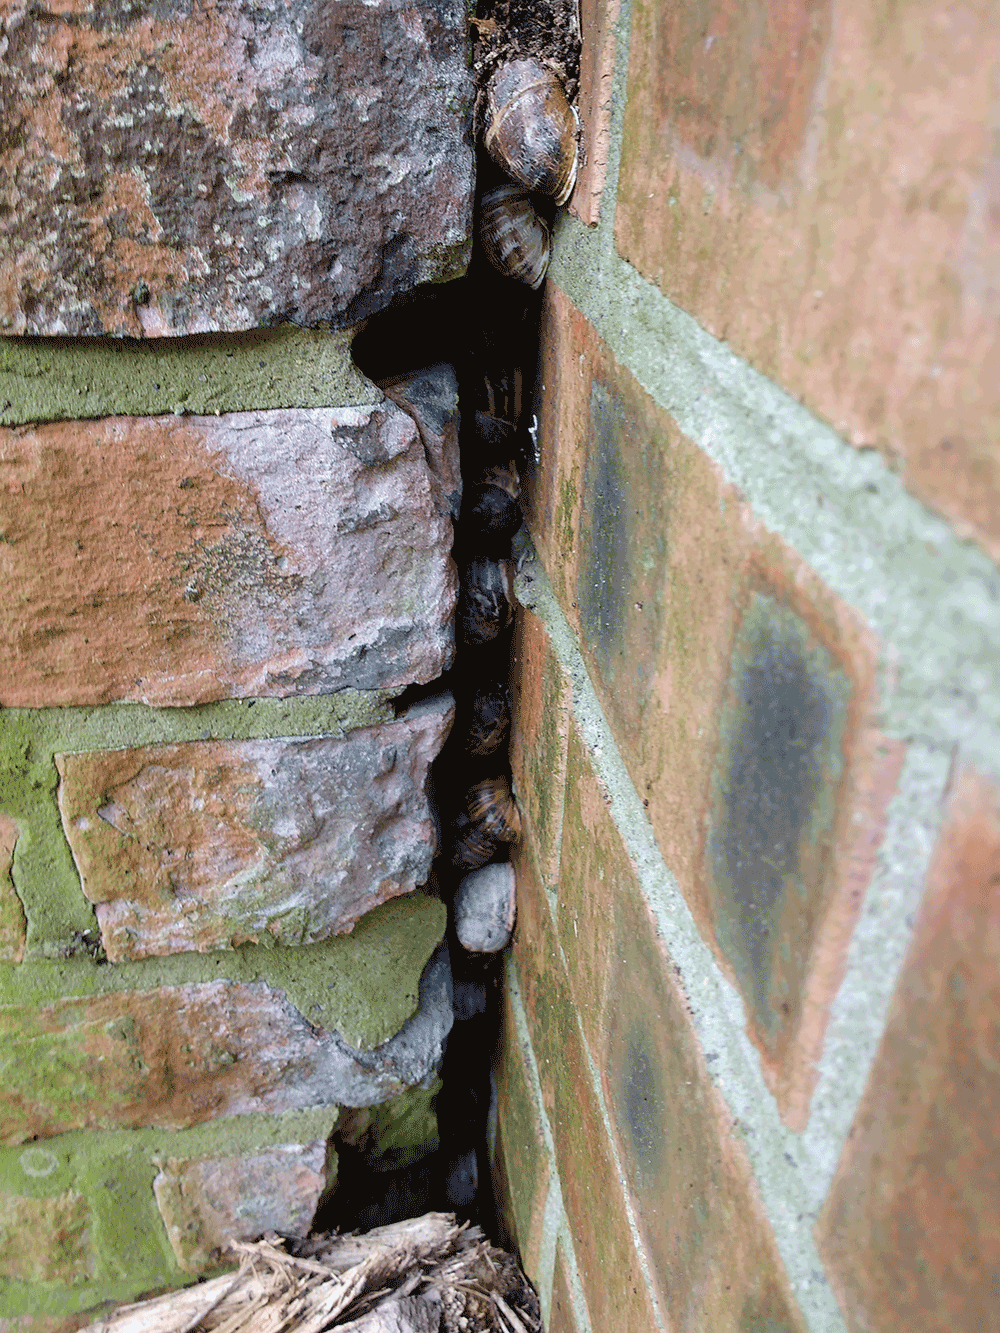 Snails hibernating in a wall